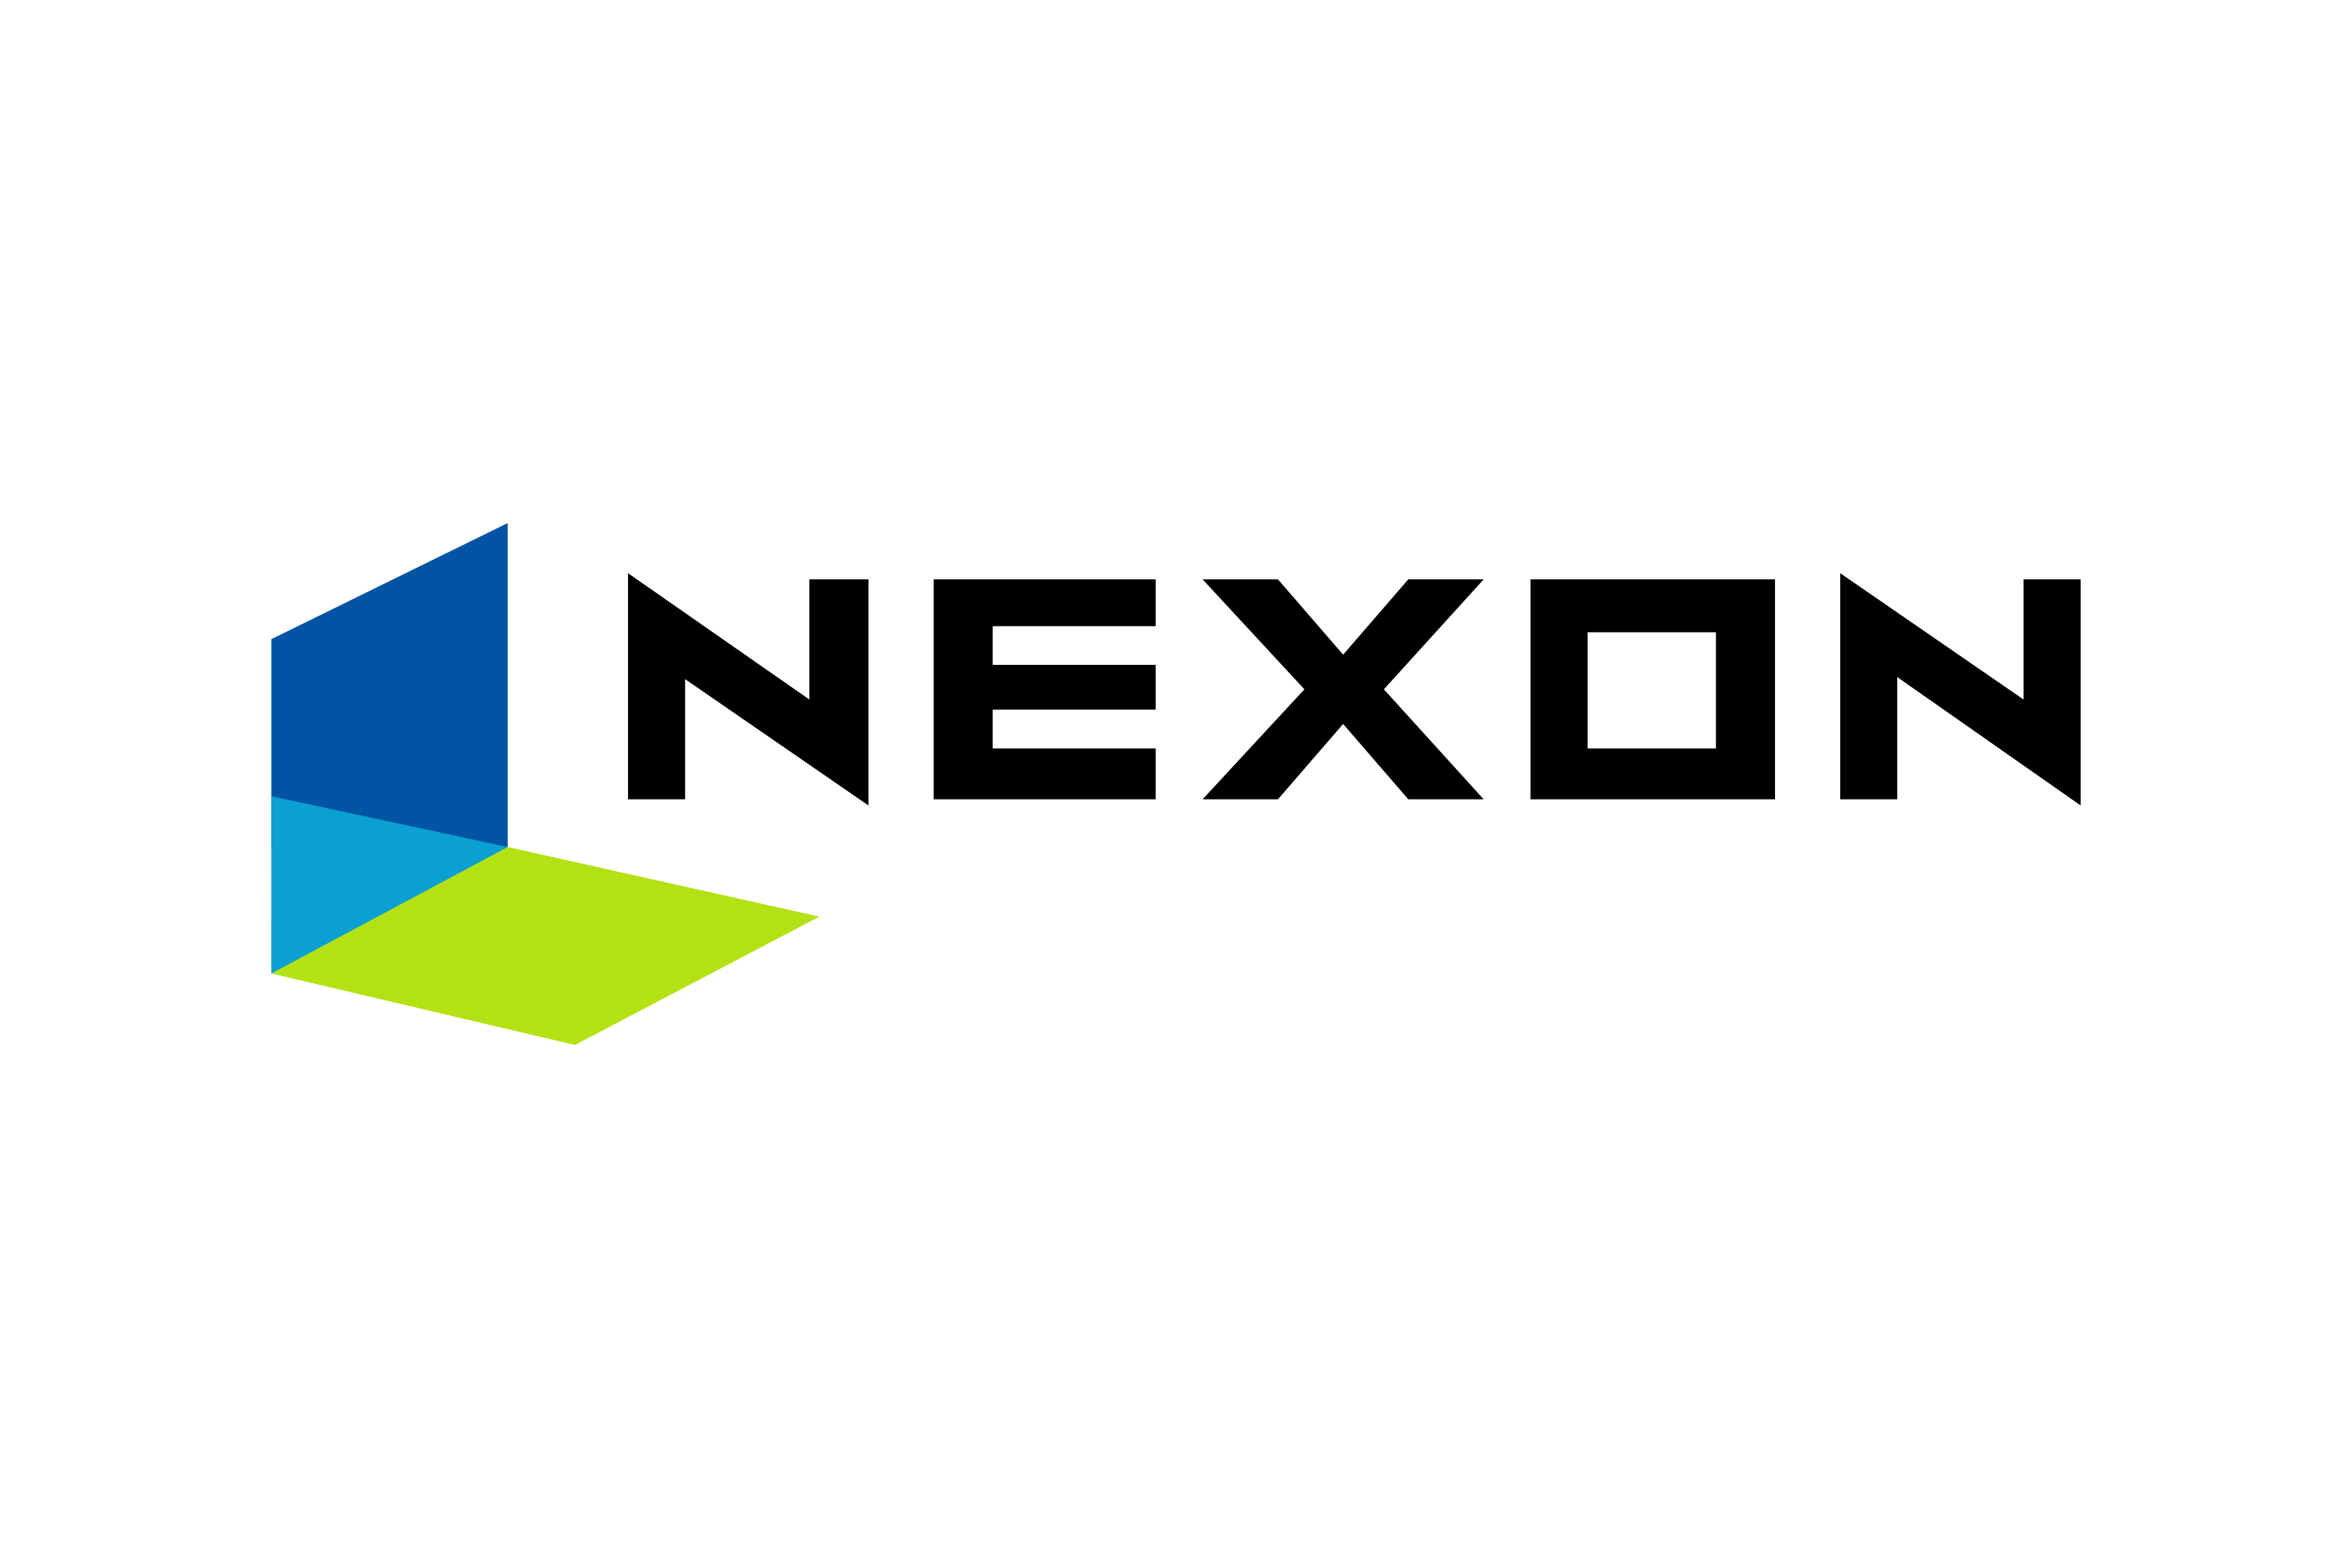 Nexon logo recreation by OliCrack on DeviantArt